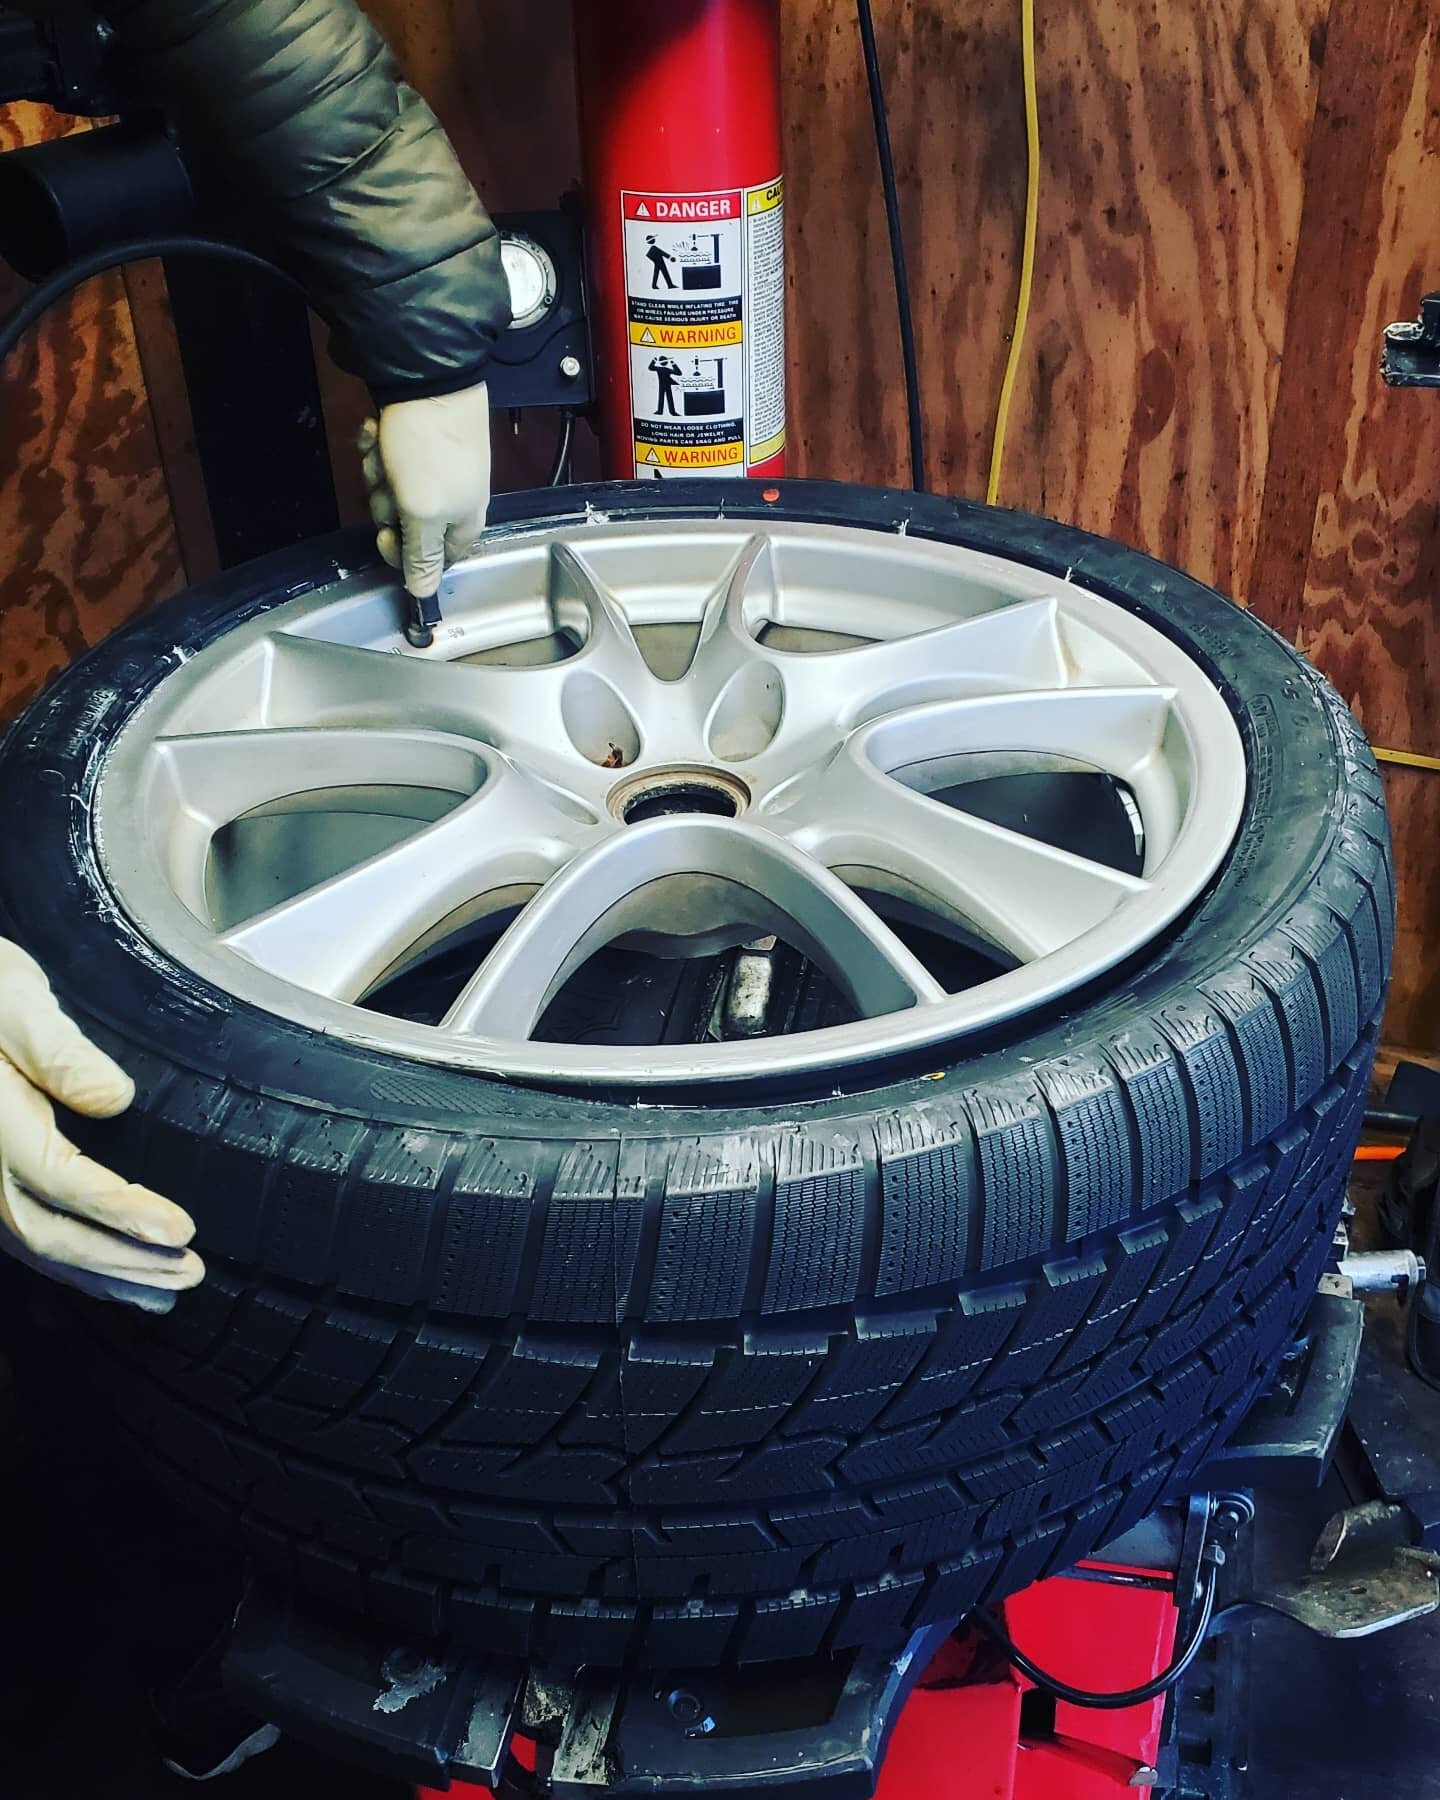 Porsche is winter ready! Come by and have your tires mounted by us. #pgcounty #washingtondc #DMV #dcmetro #dc #virginia #nova #flattires #tires #spare #tirechange #battery #batteryservice #jumpstart #deadbattery #lockout #lockedout #lostkeys #gasdeli